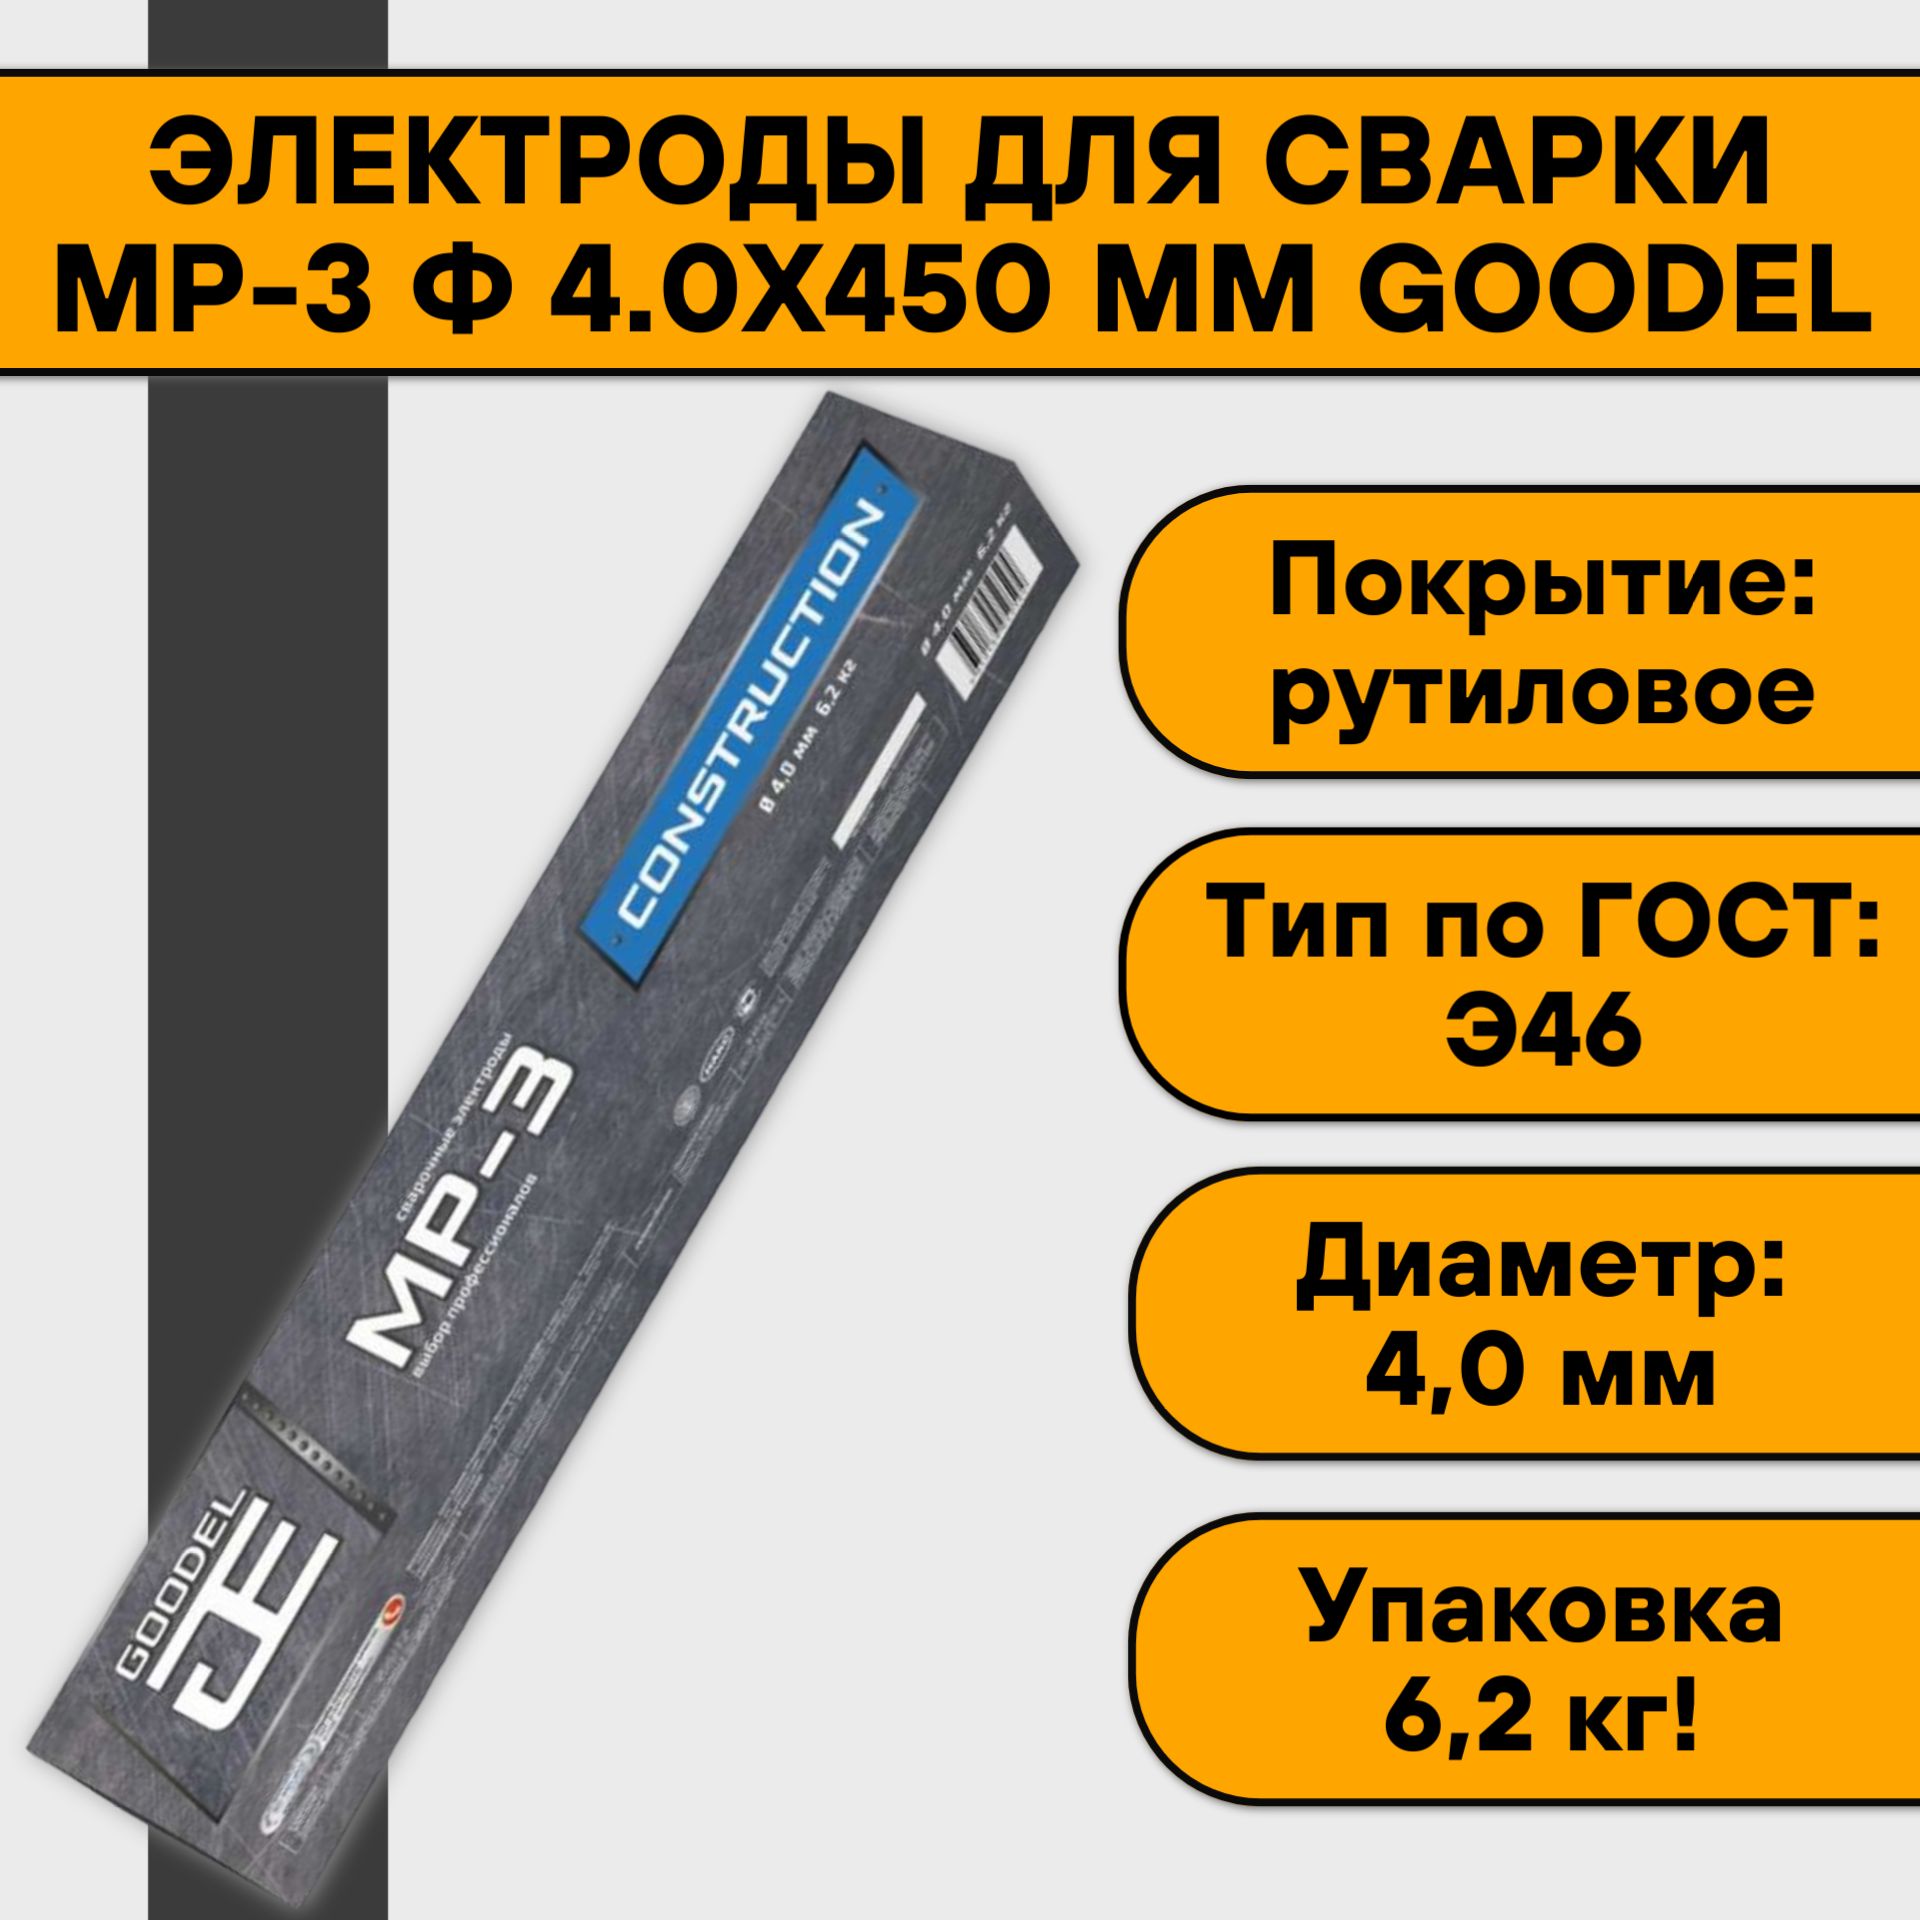 Электроды для сварки Goodel МР-3 ф 4.0х450 мм (6,2 кг)